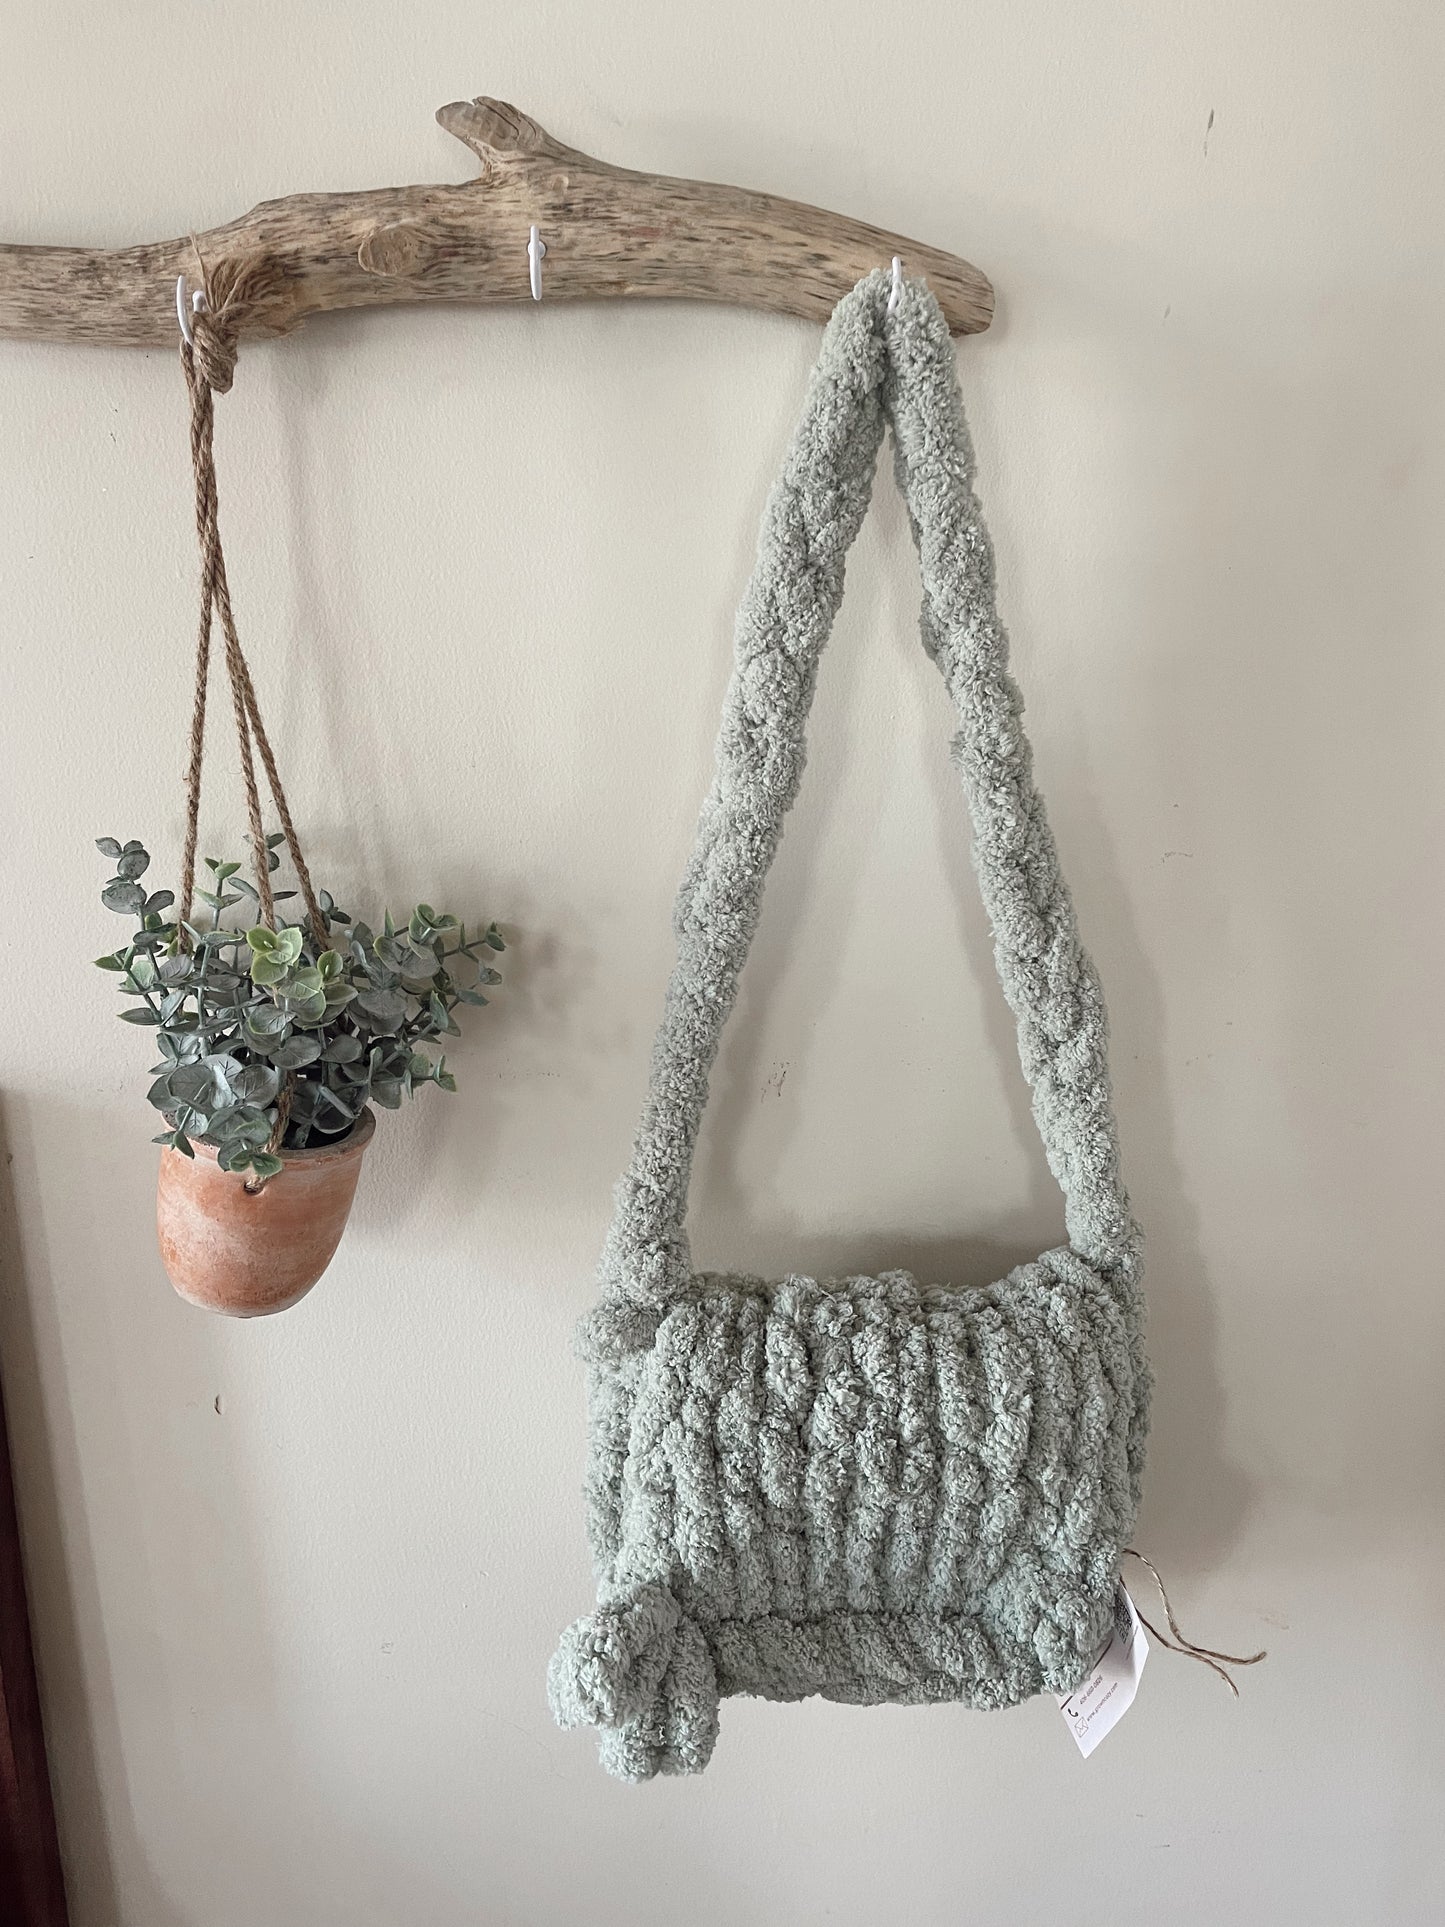 Chunky knit purses